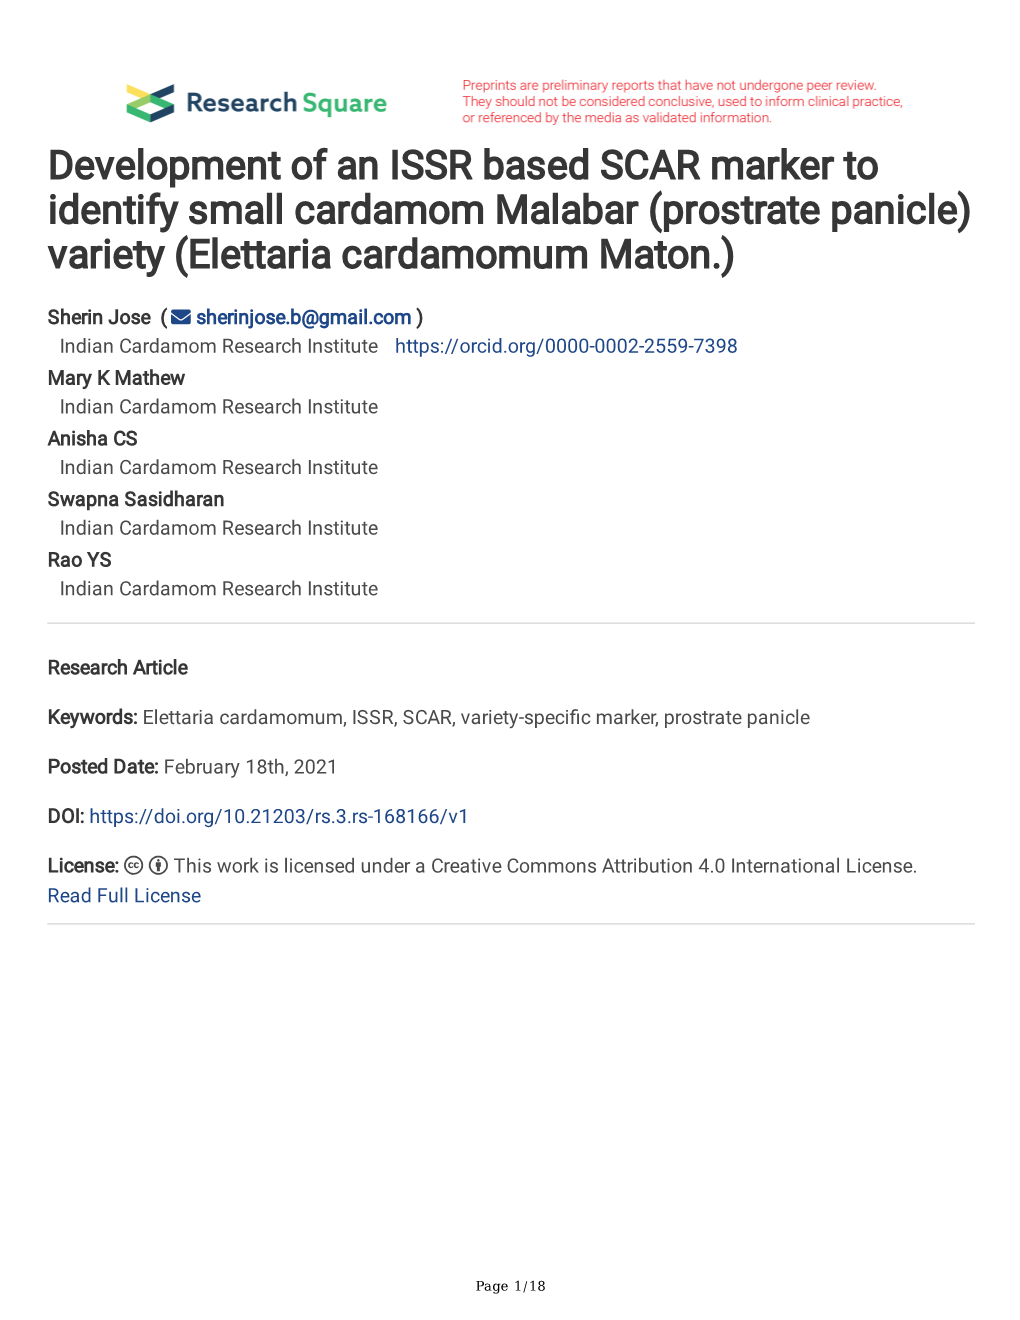 Development of an ISSR Based SCAR Marker to Identify Small Cardamom Malabar (Prostrate Panicle) Variety (Elettaria Cardamomum Maton.)